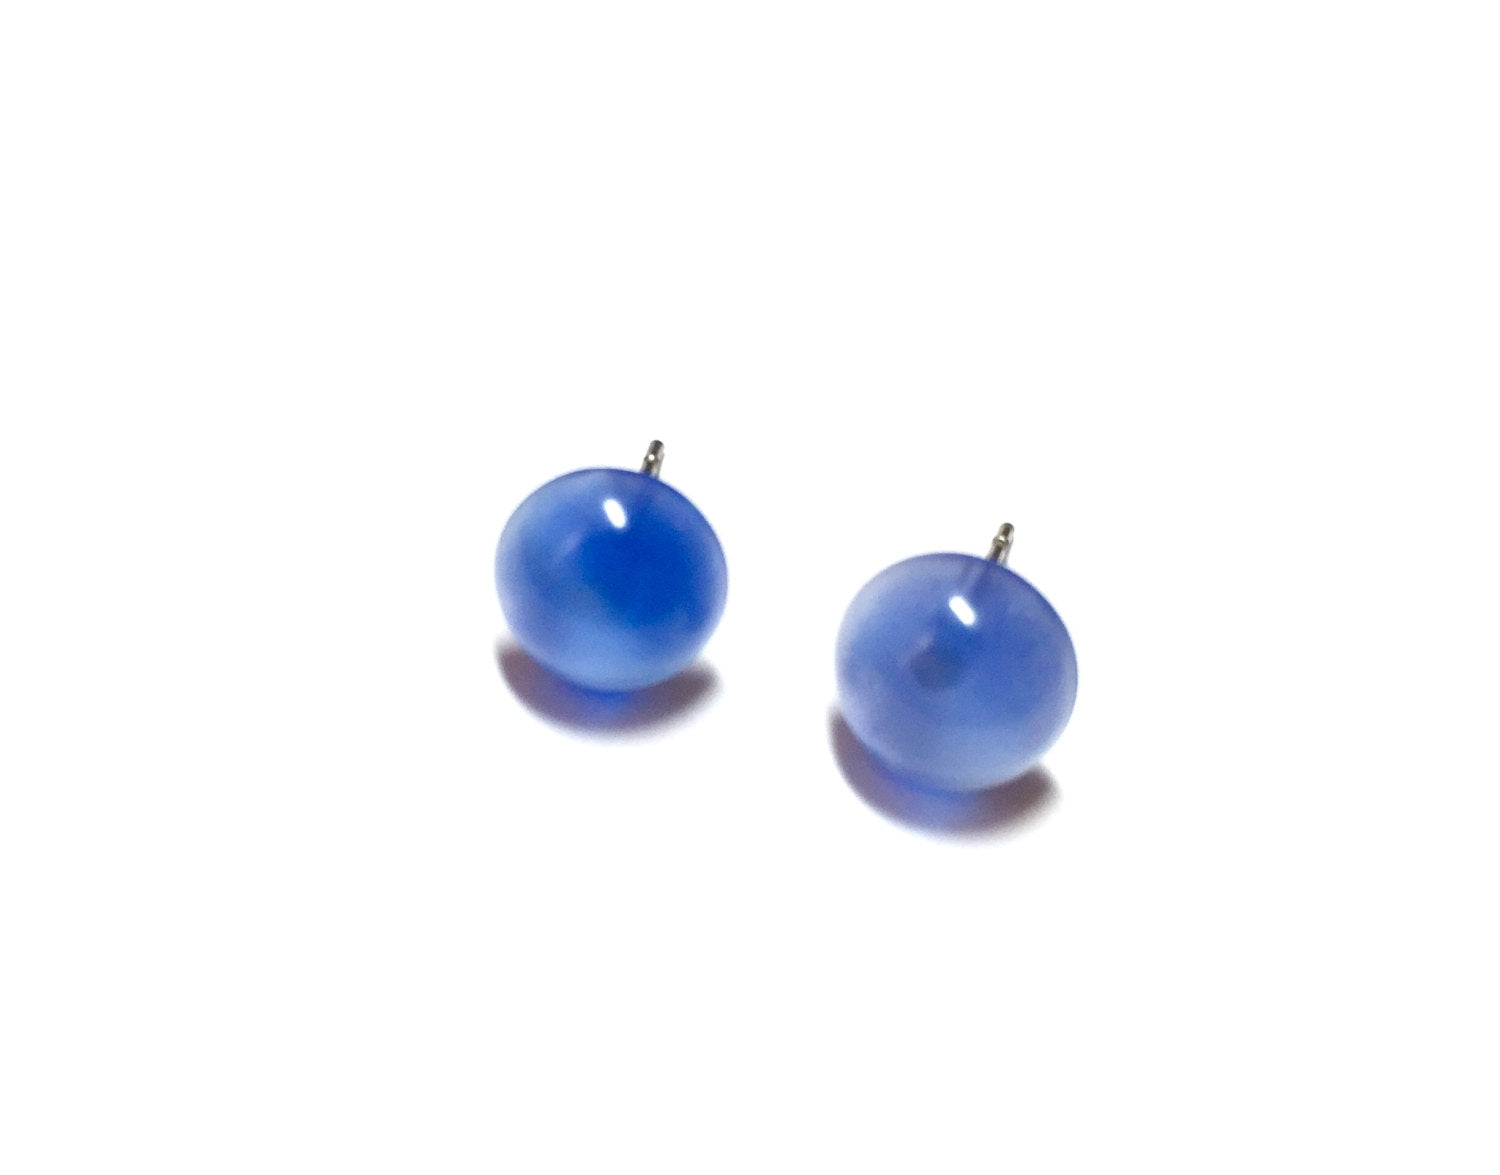 royal blue earrings